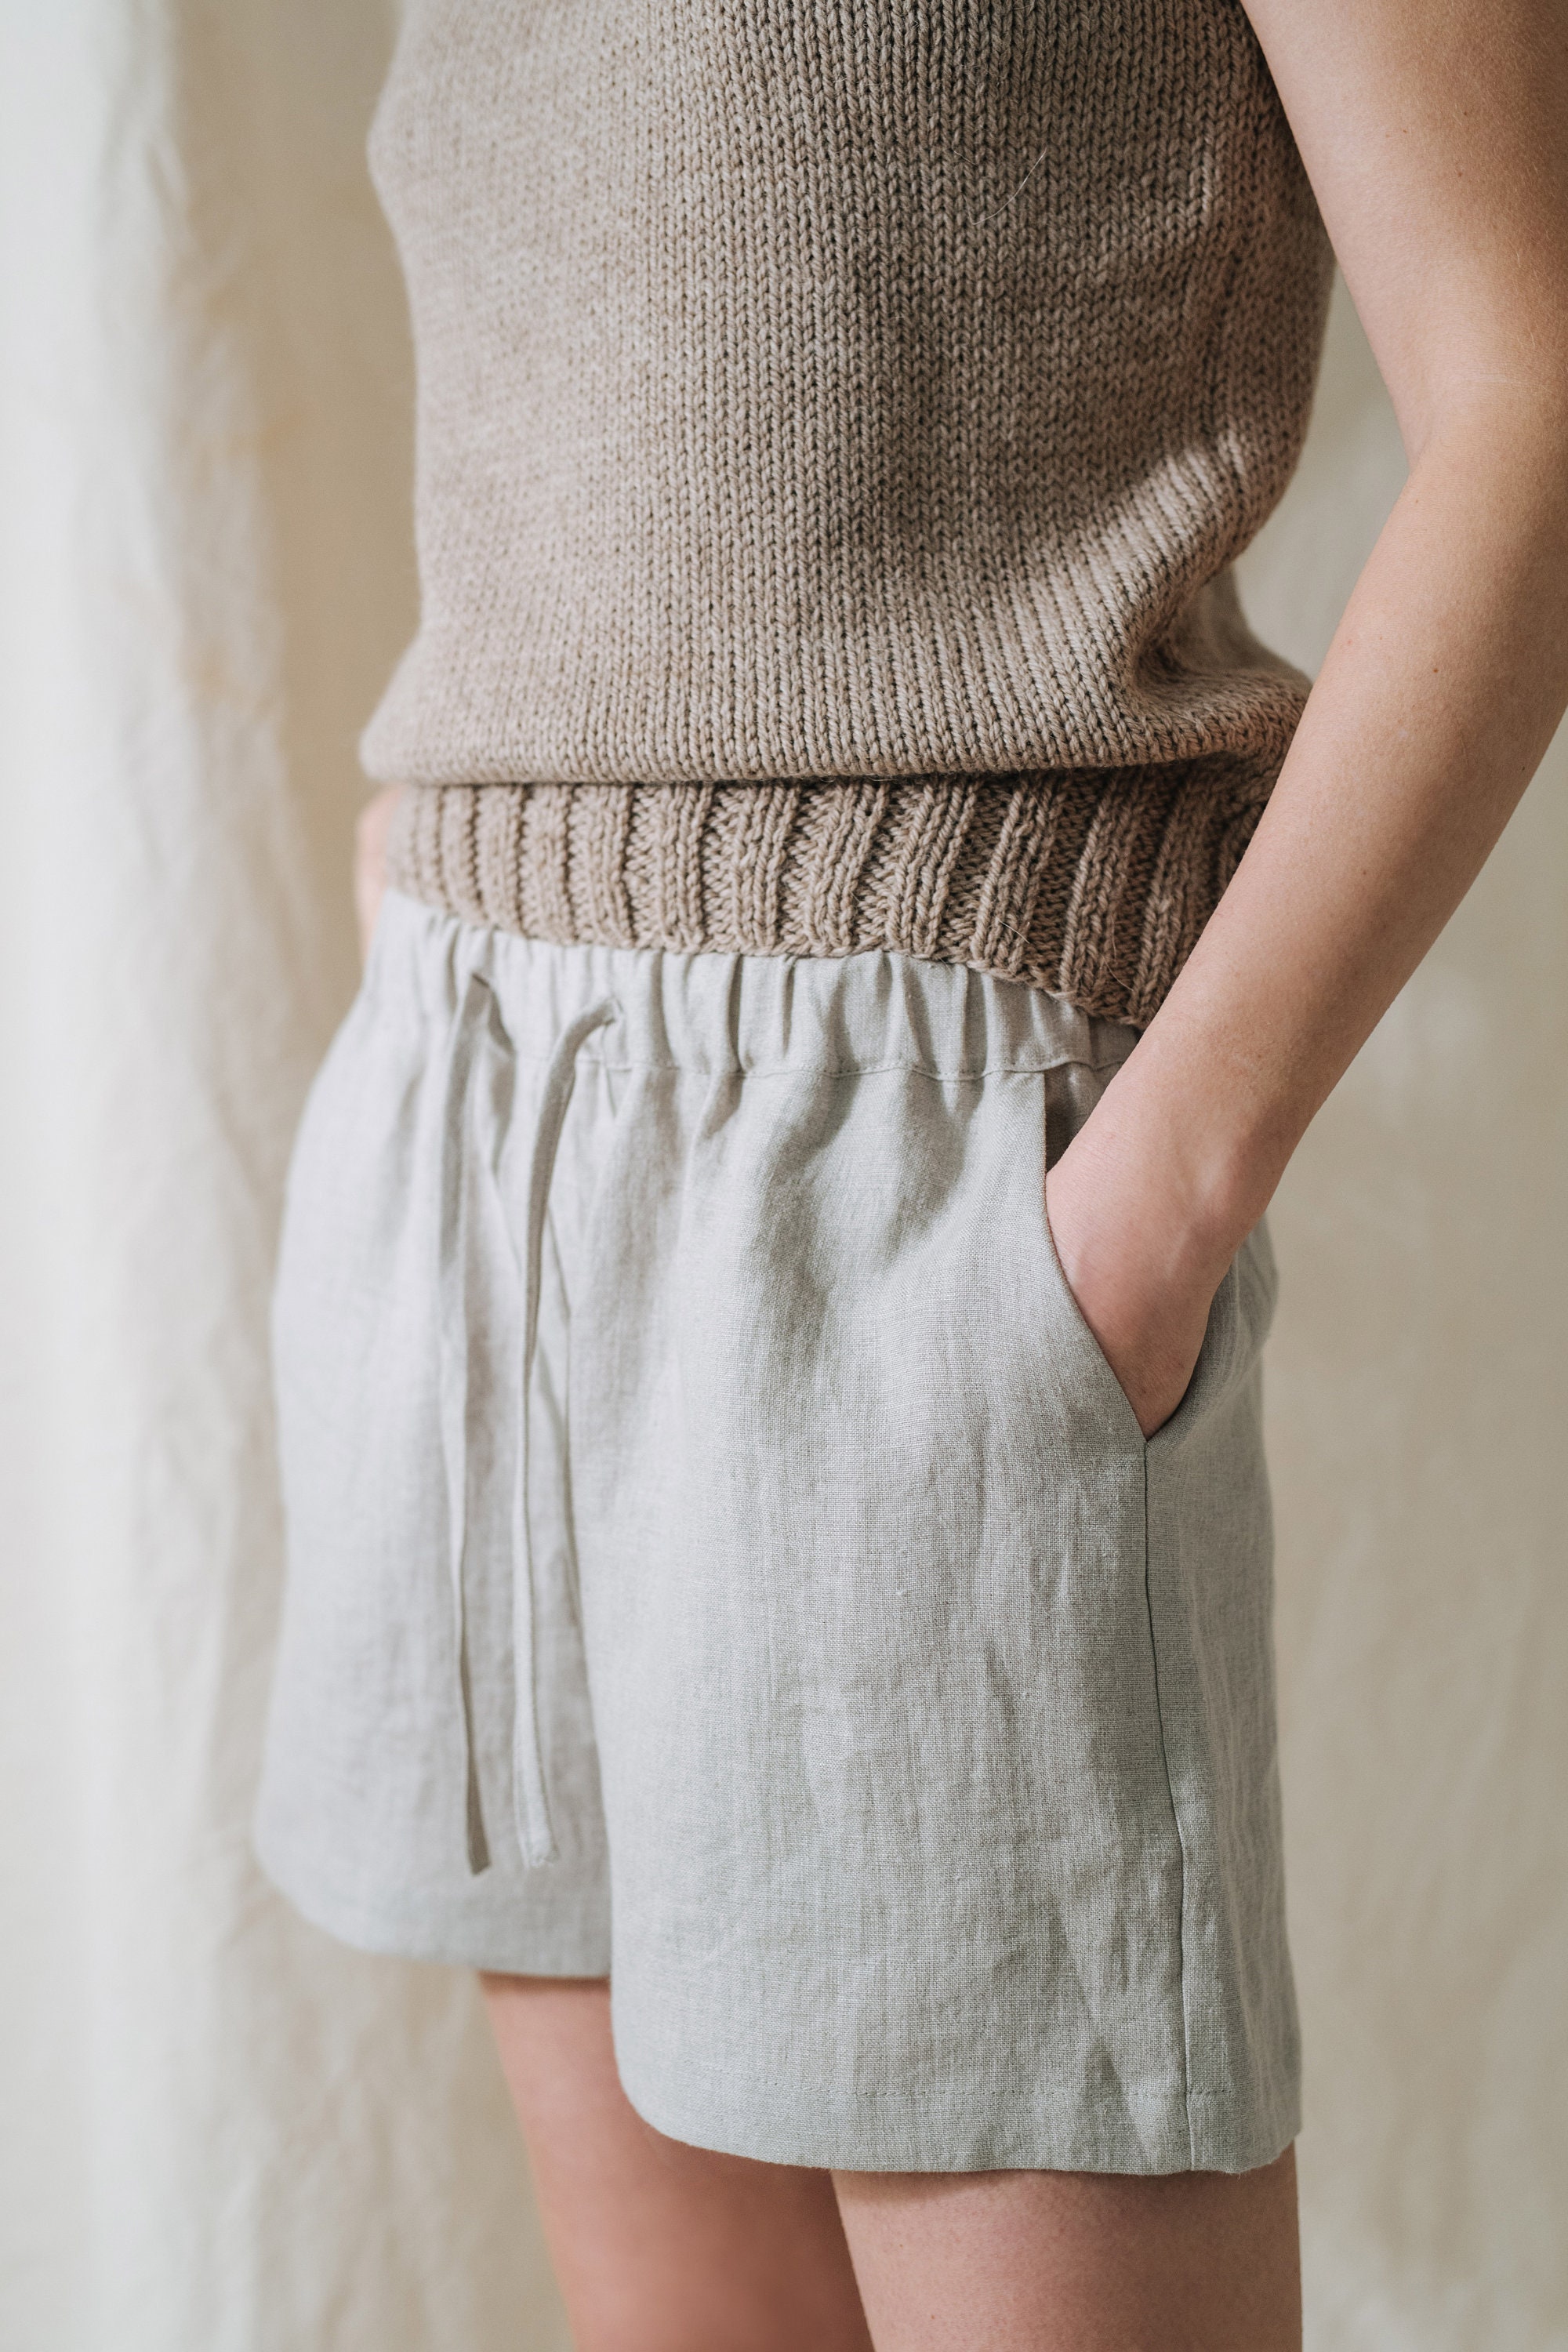 Linen Elastic Waist Shorts Premium Linen Clothing for Women 